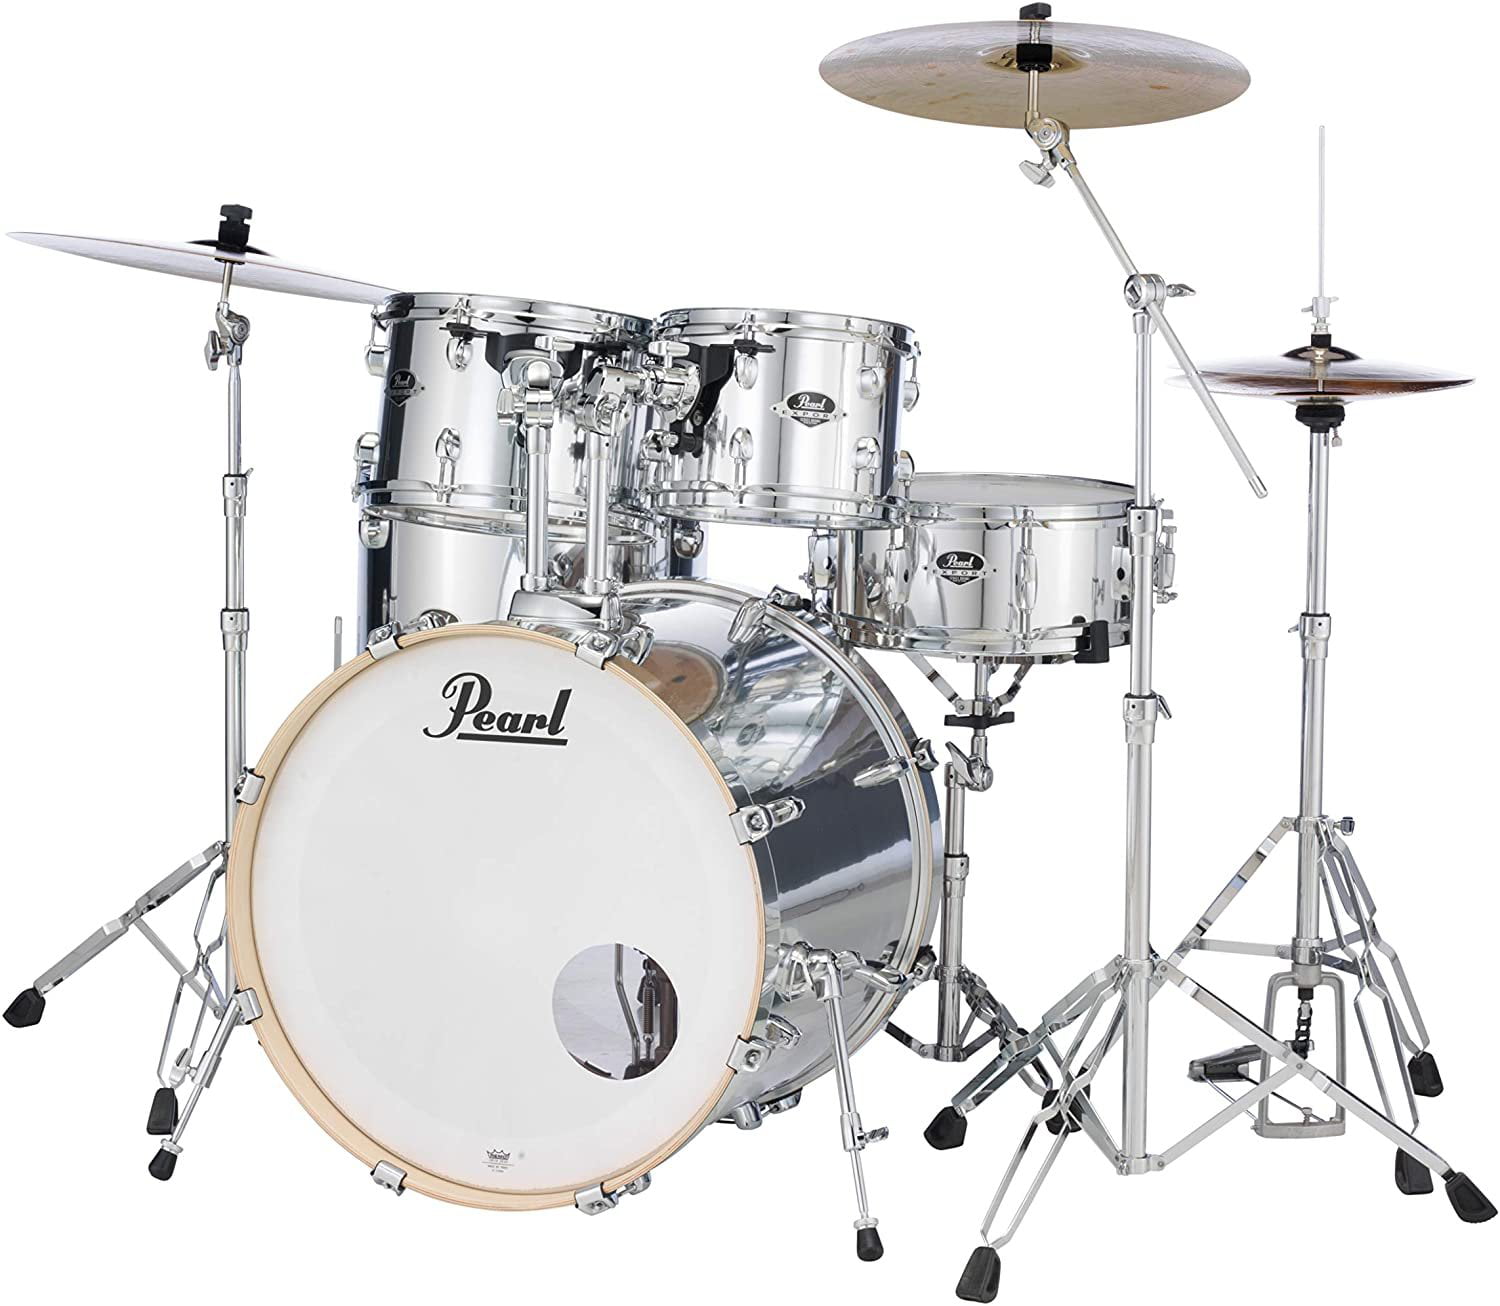 6 Pieces Drum Jam Block Musical Percussion Block with Maple Drum Sticks 5A Adjustable Mount Bracket Plastic Percussion Instruments Block for Latin Drum 